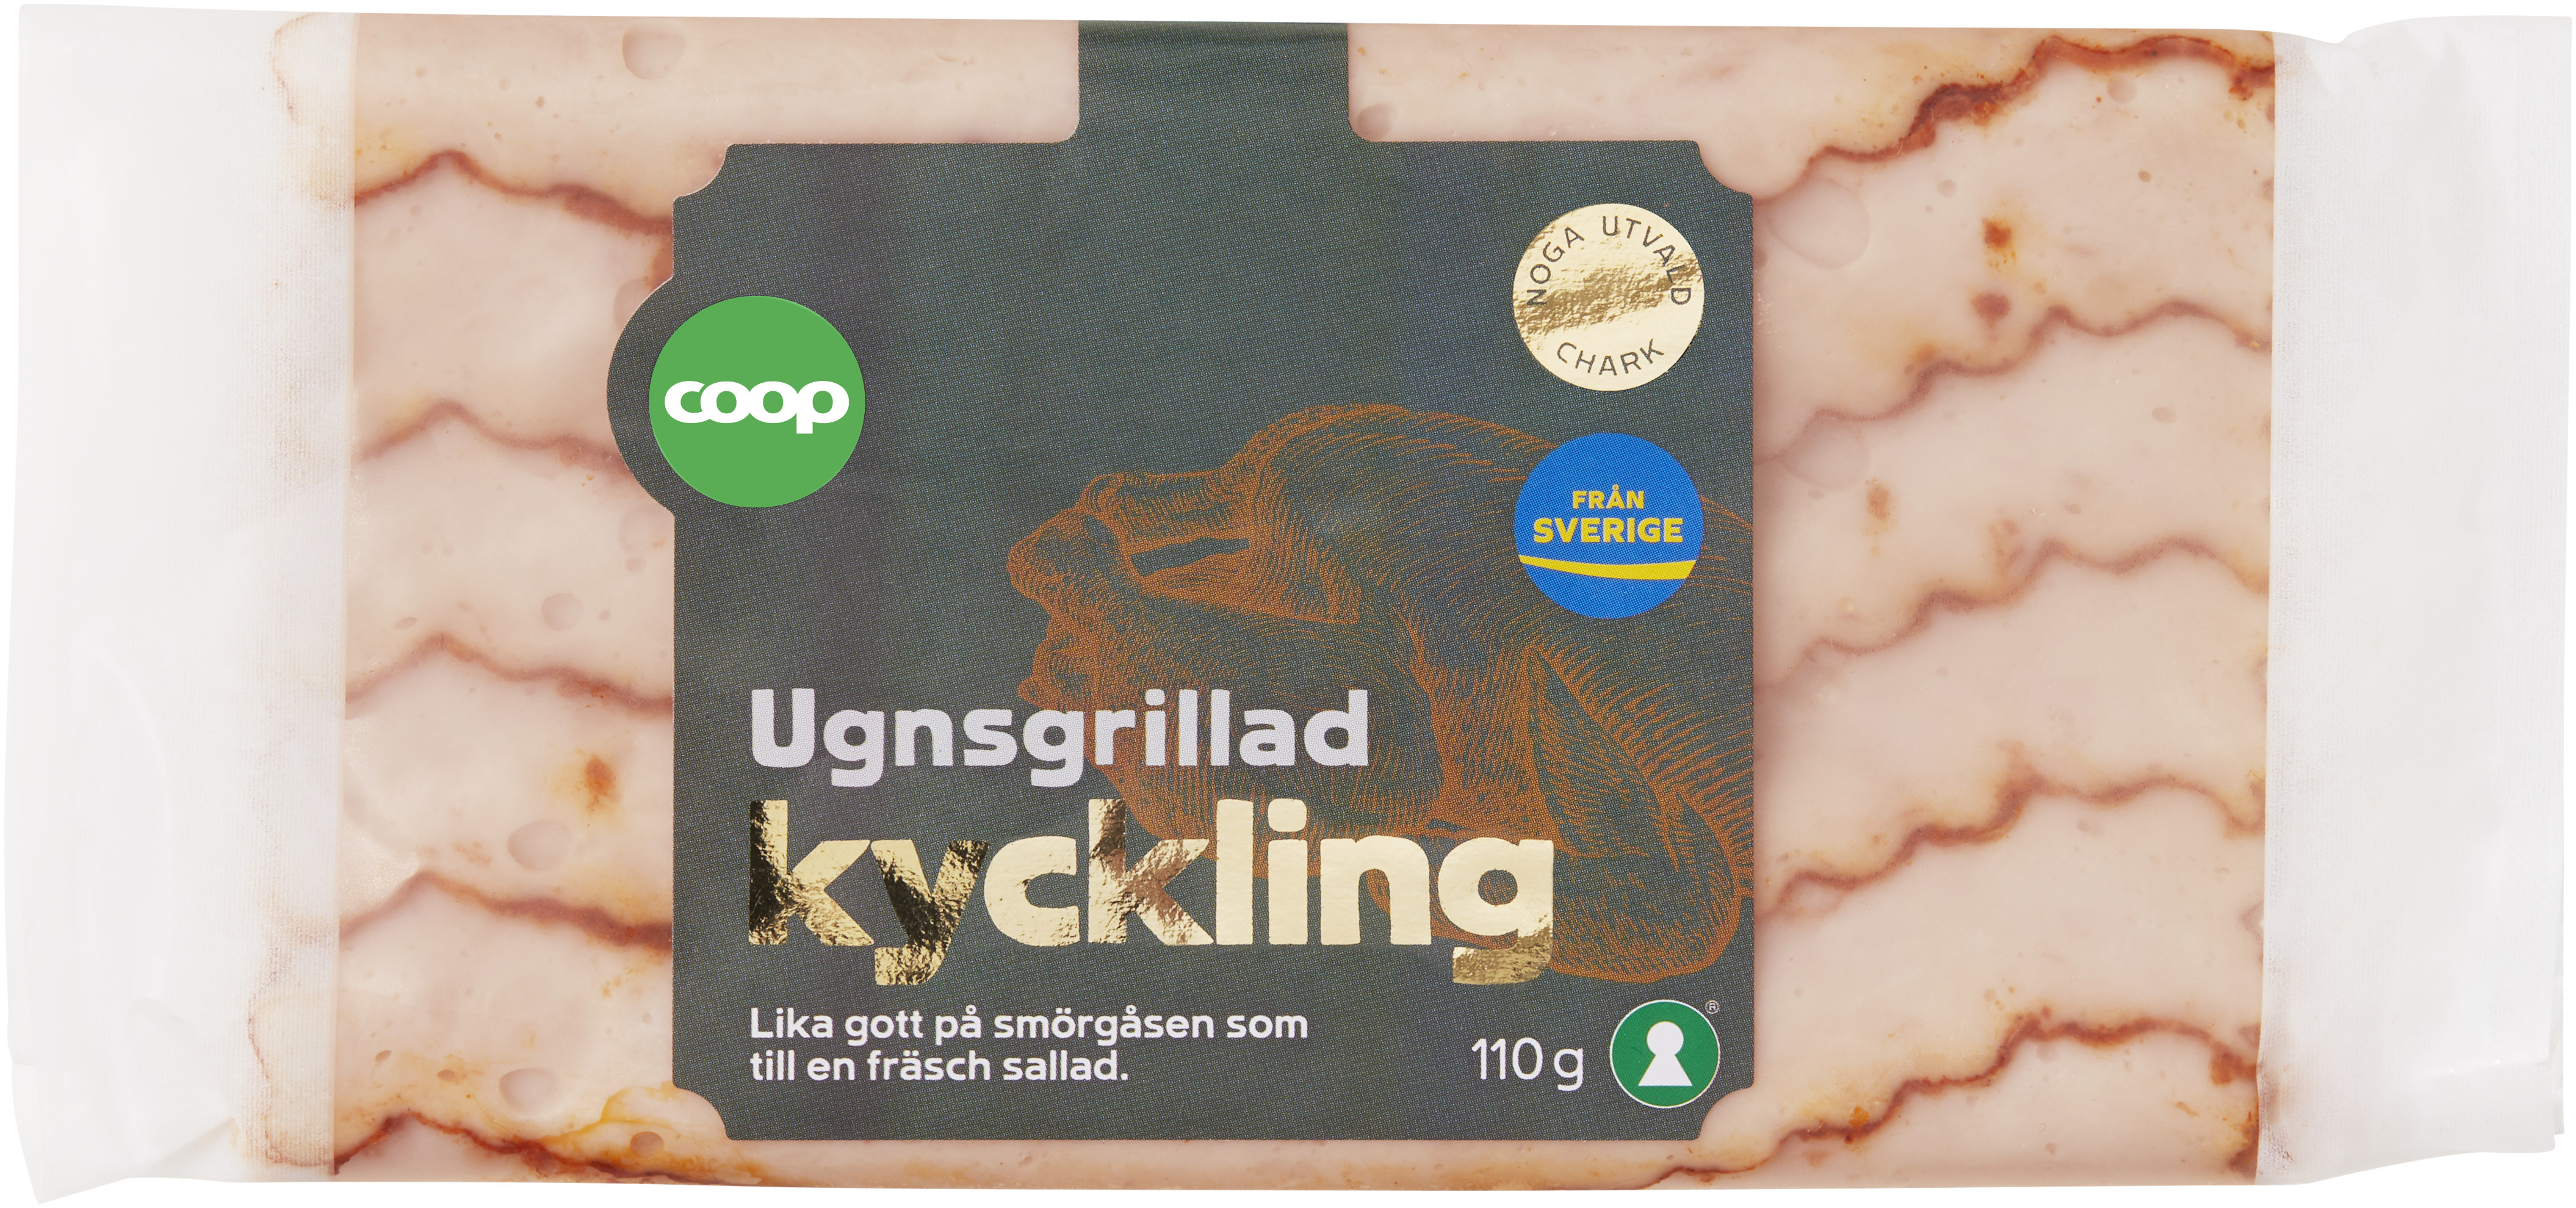 Kyckling Grillad - Coop | Coop